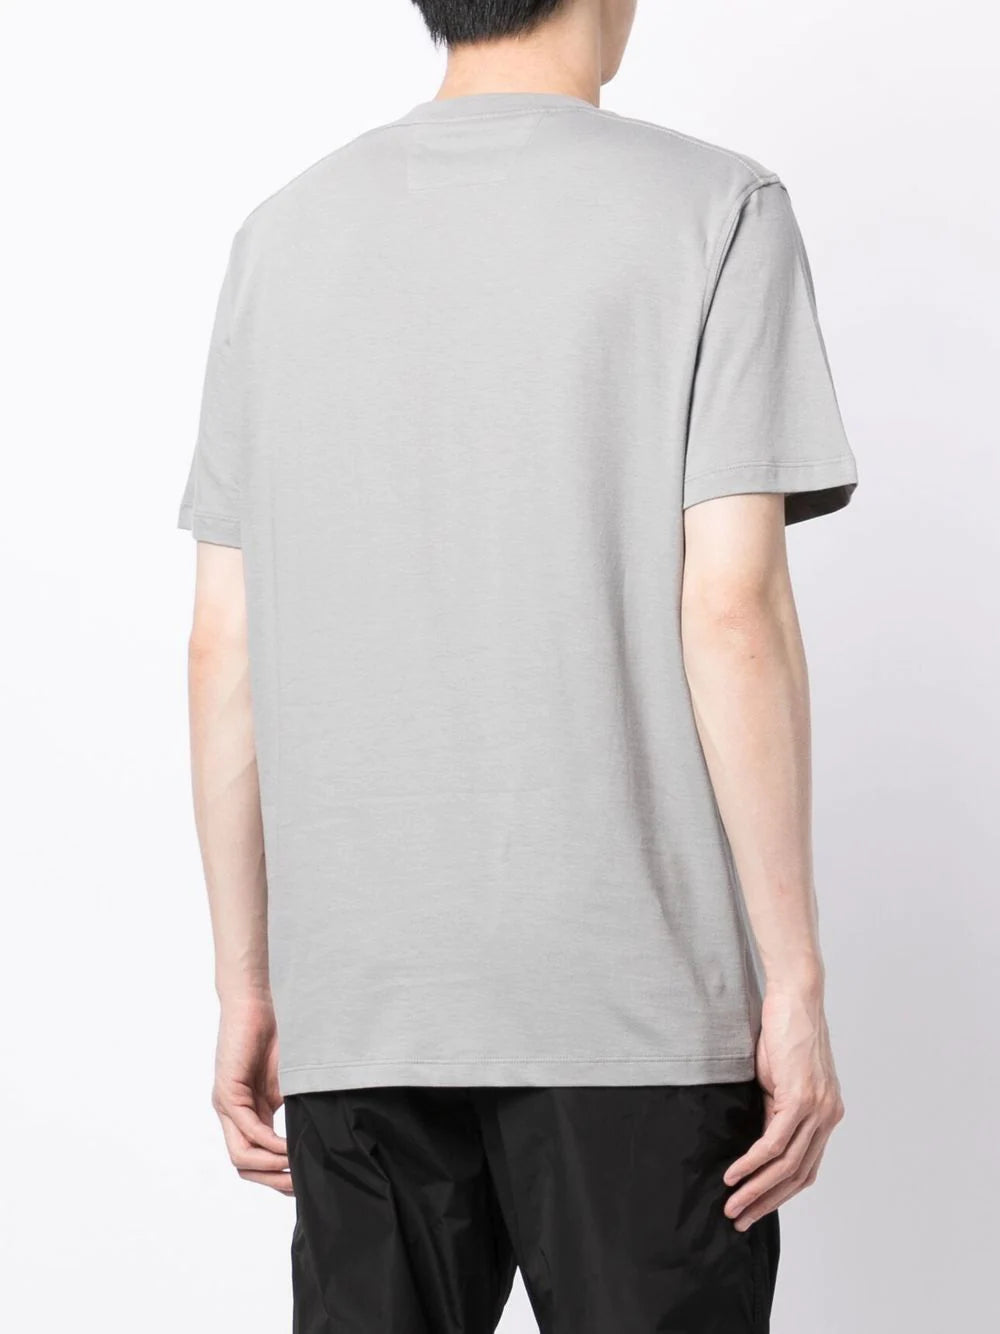 C.P. COMPANY Logo-print T-shirt Grey - MAISONDEFASHION.COM